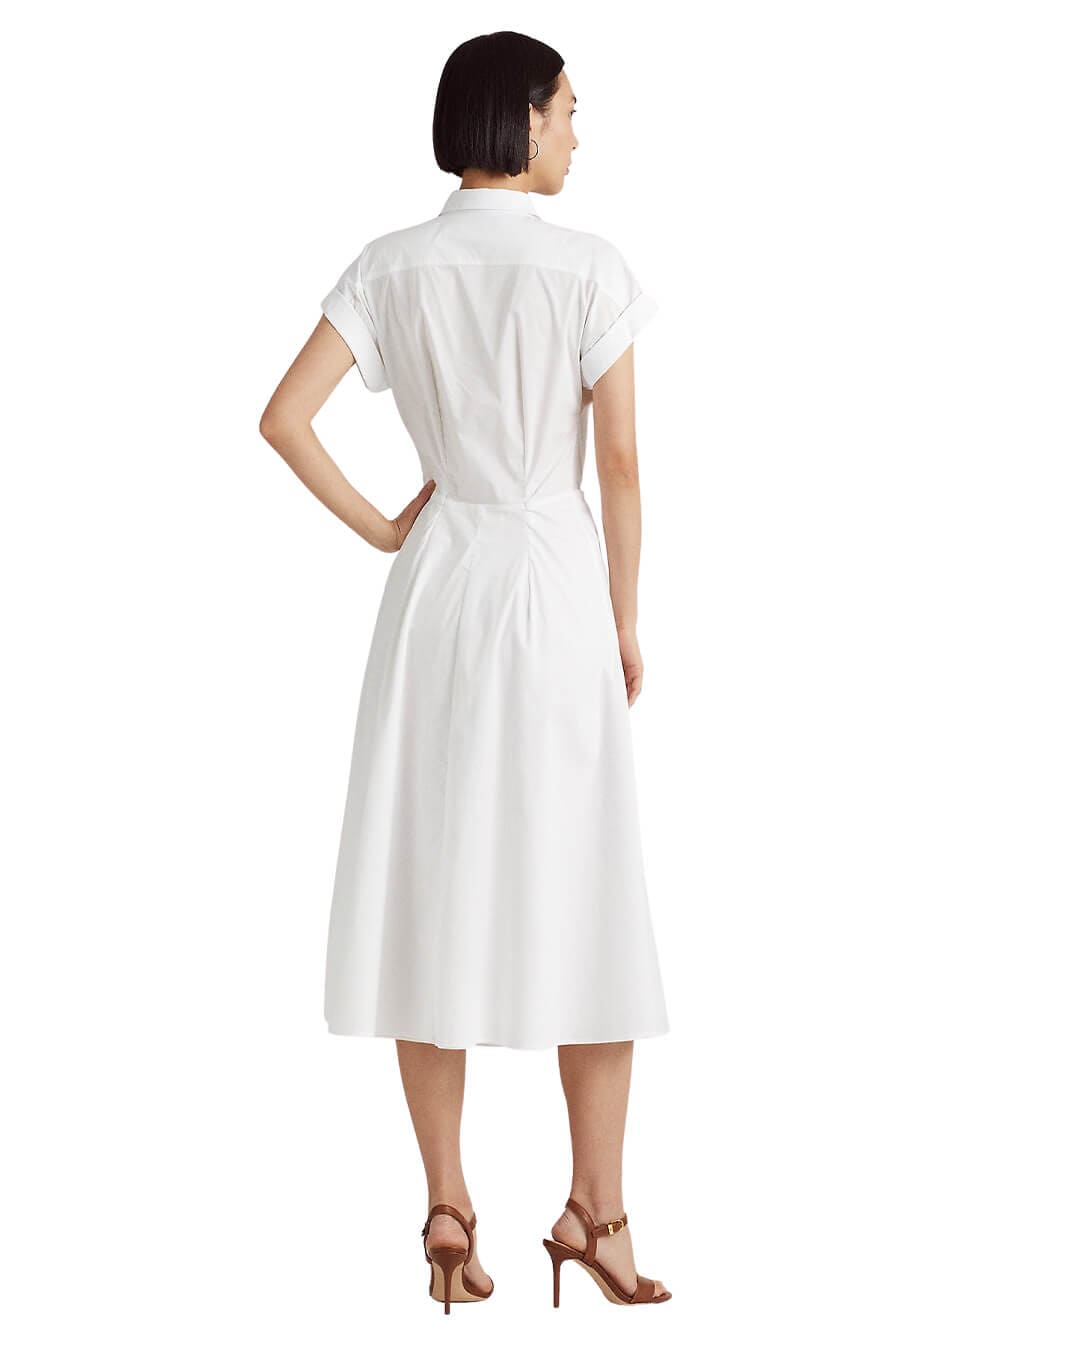 Lauren By Ralph Lauren Dresses Lauren By Ralph Lauren White Twist-Front Cotton-Blend Shirtdress